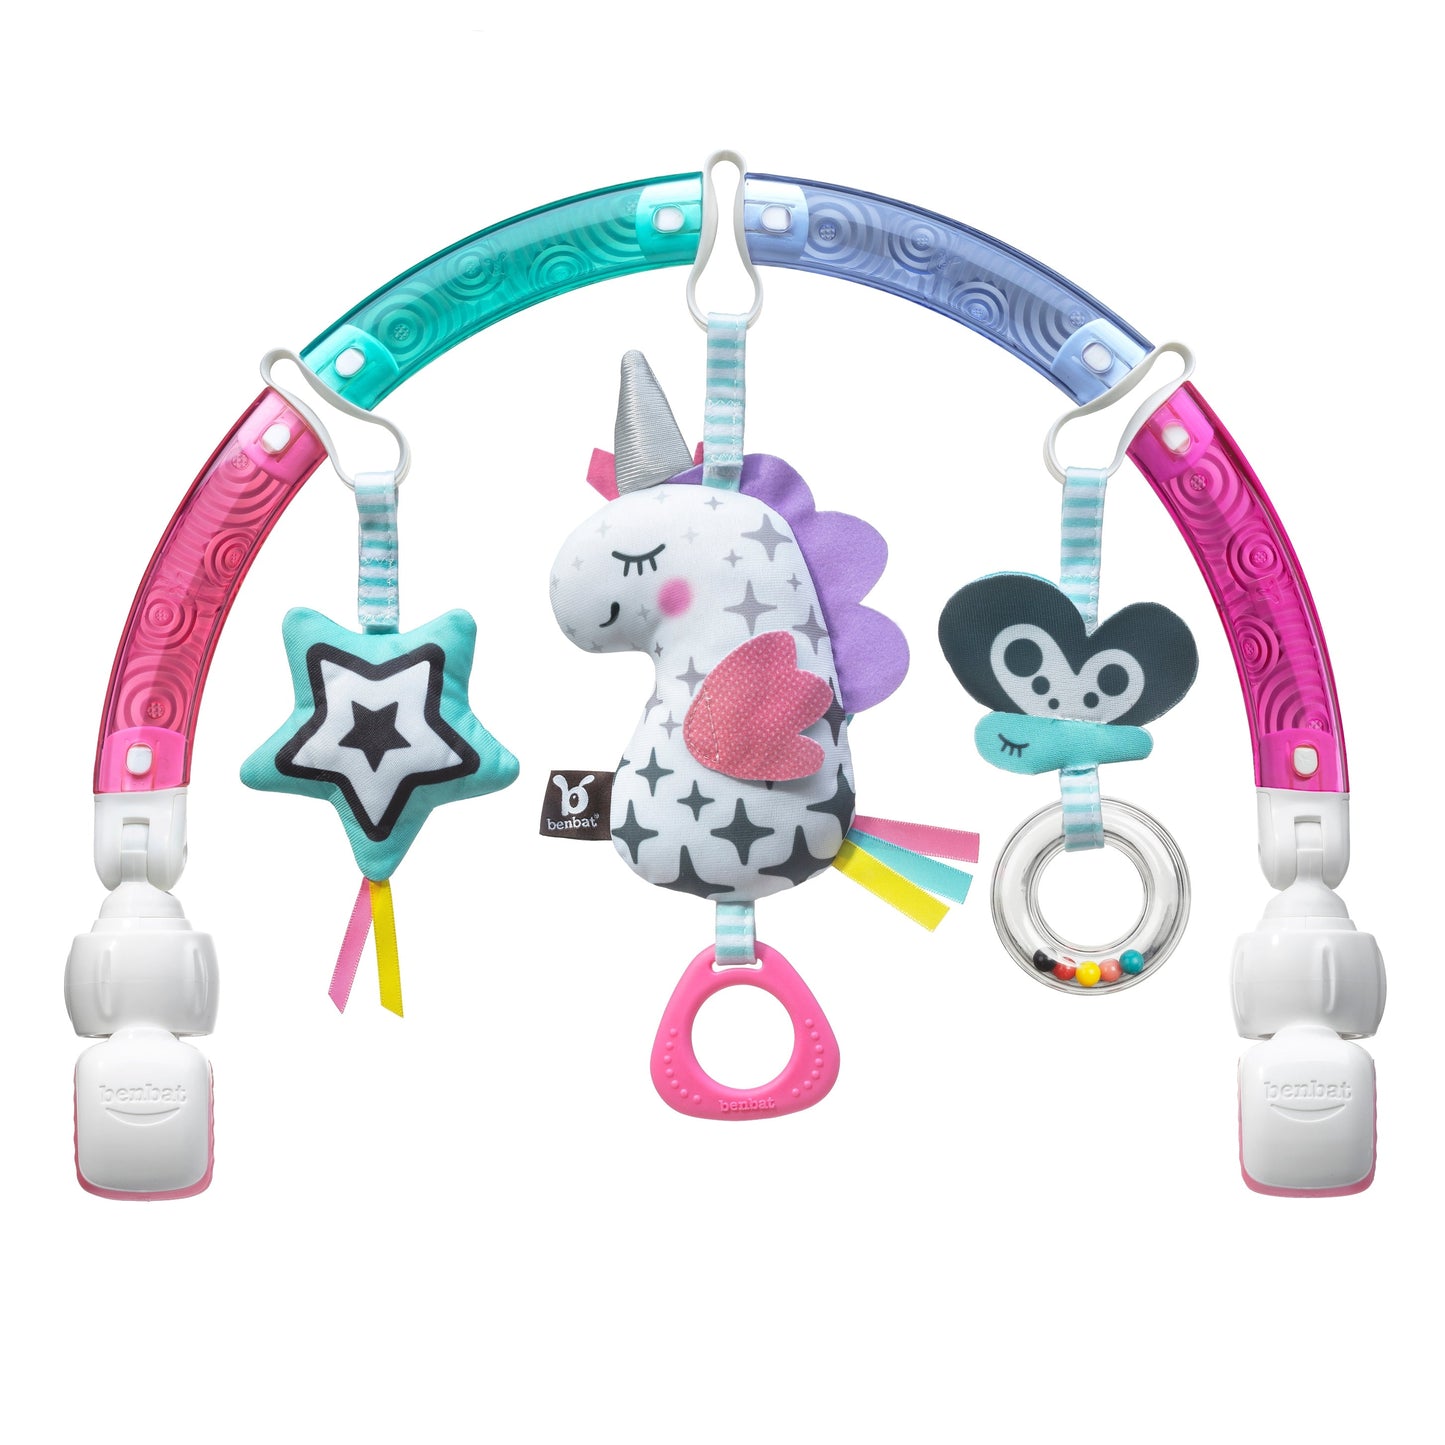 Benbat - Unicorn Play Arch Mobile toy